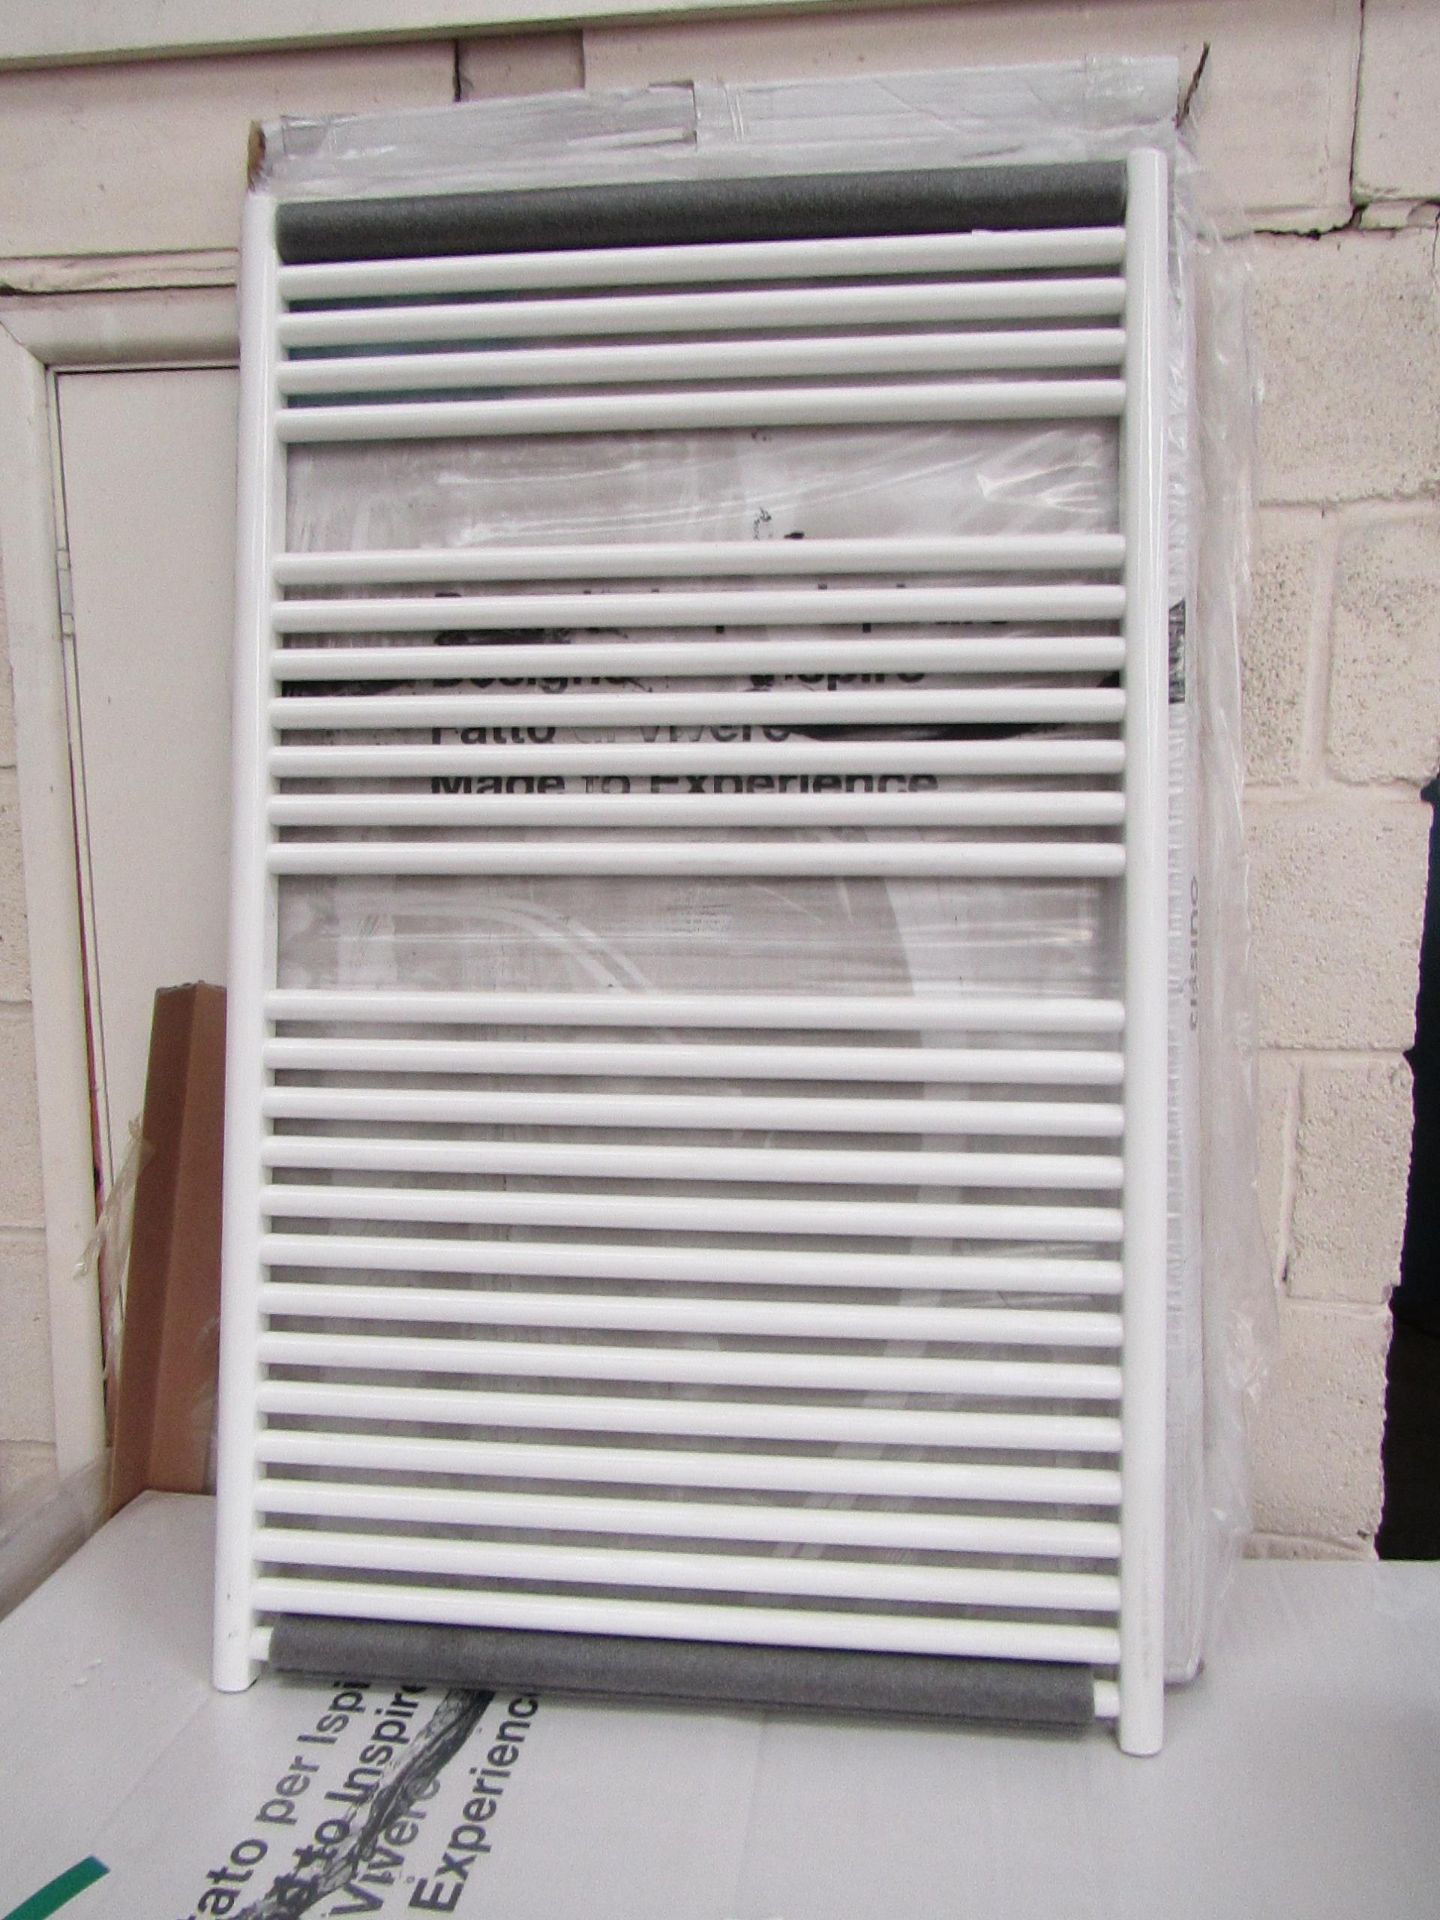 Tissino Hugo series 2 Chunky 1212x750mm White towel radiator, new and boxed.